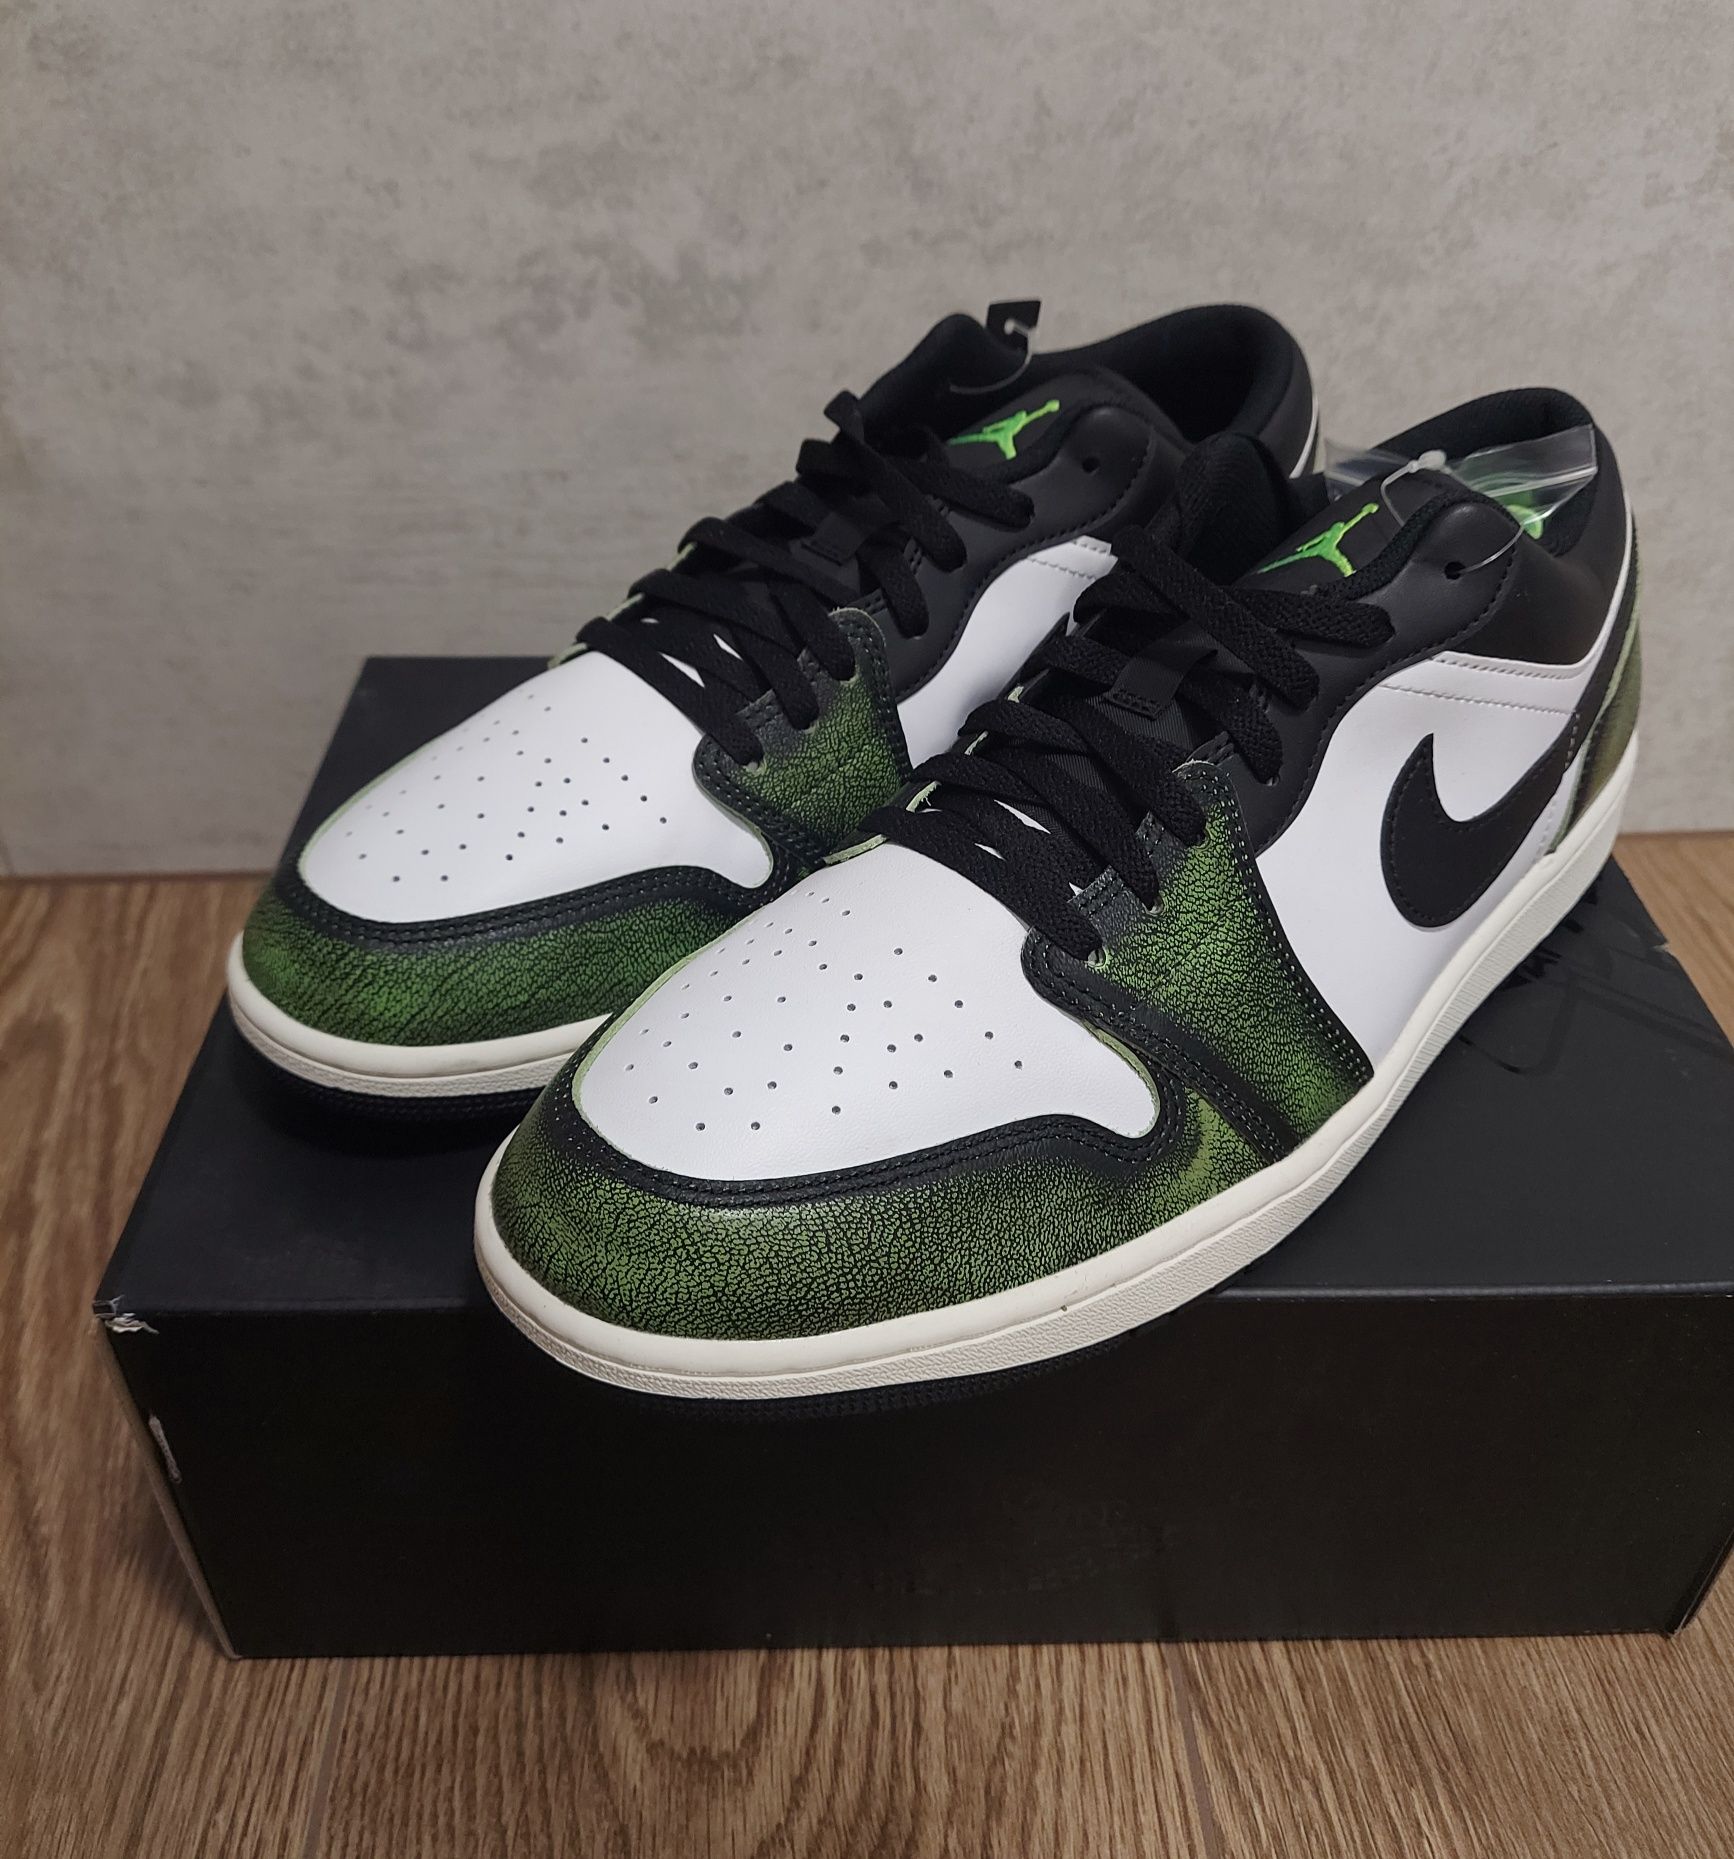 Buty Nike Air Jordan 1 low Electric Green rozmiar 49.5